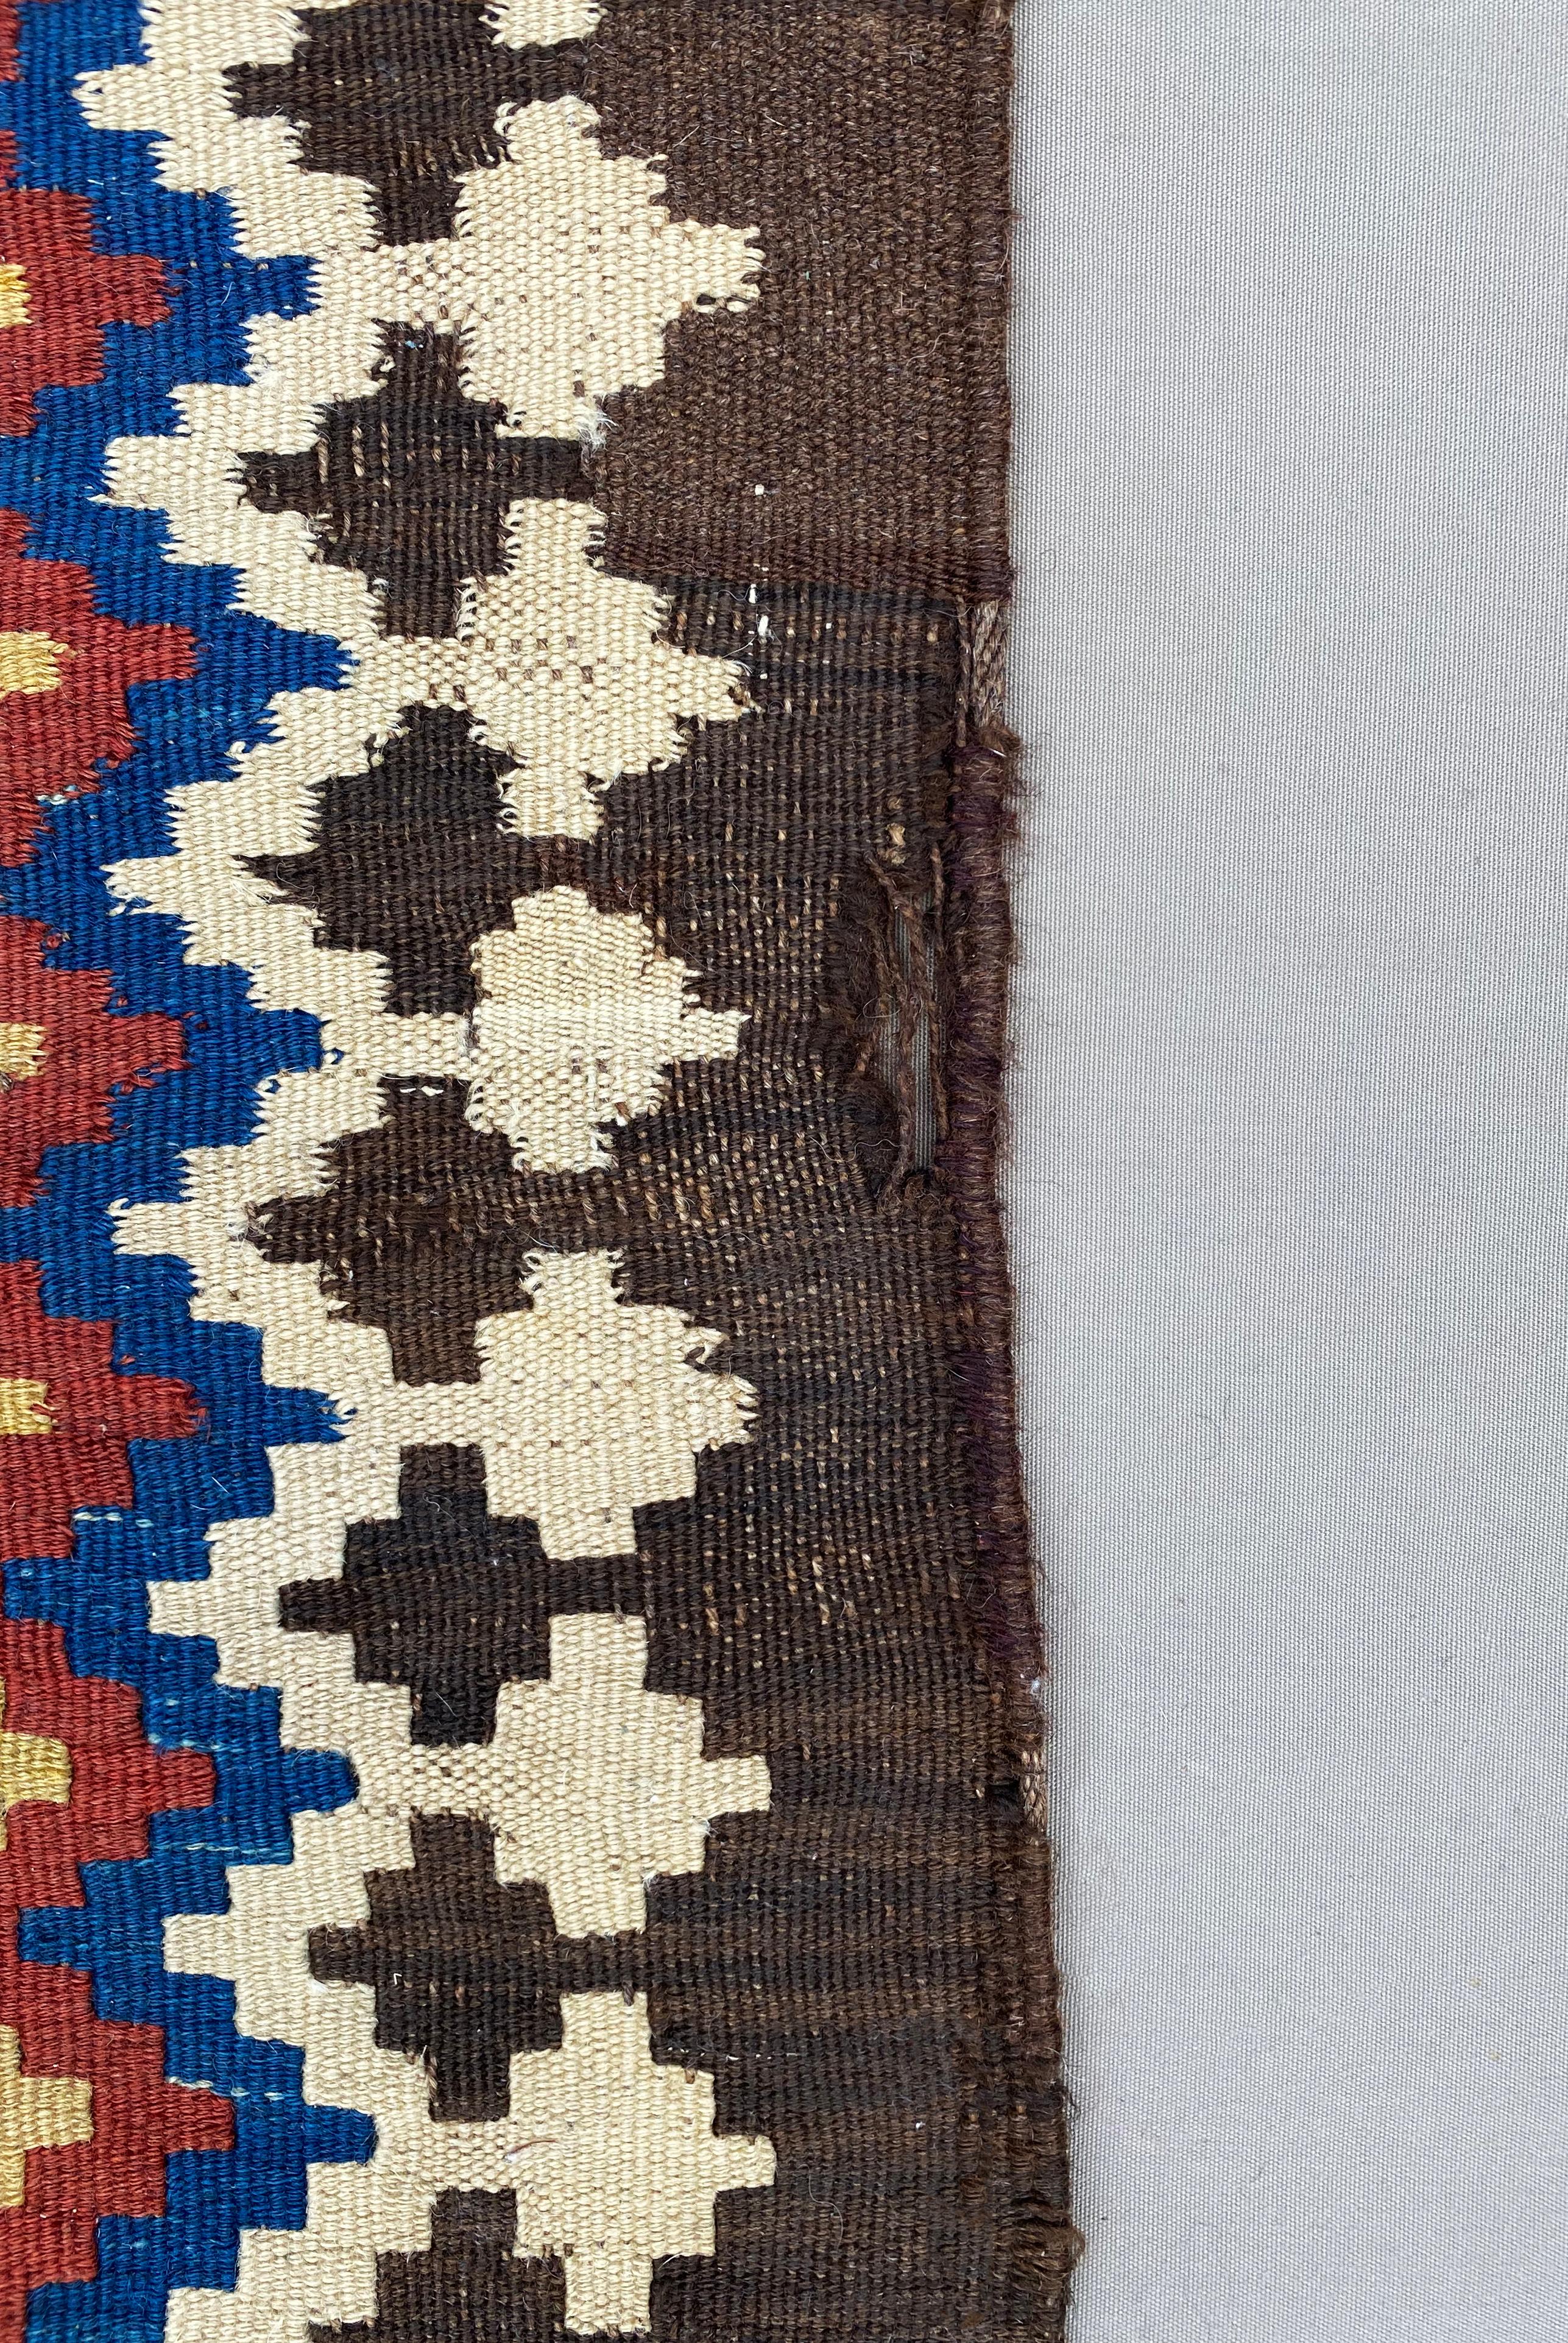 Uzbekistan Tartari Ranghi Kilim Rug from Wool, Early 20th Century For Sale 5